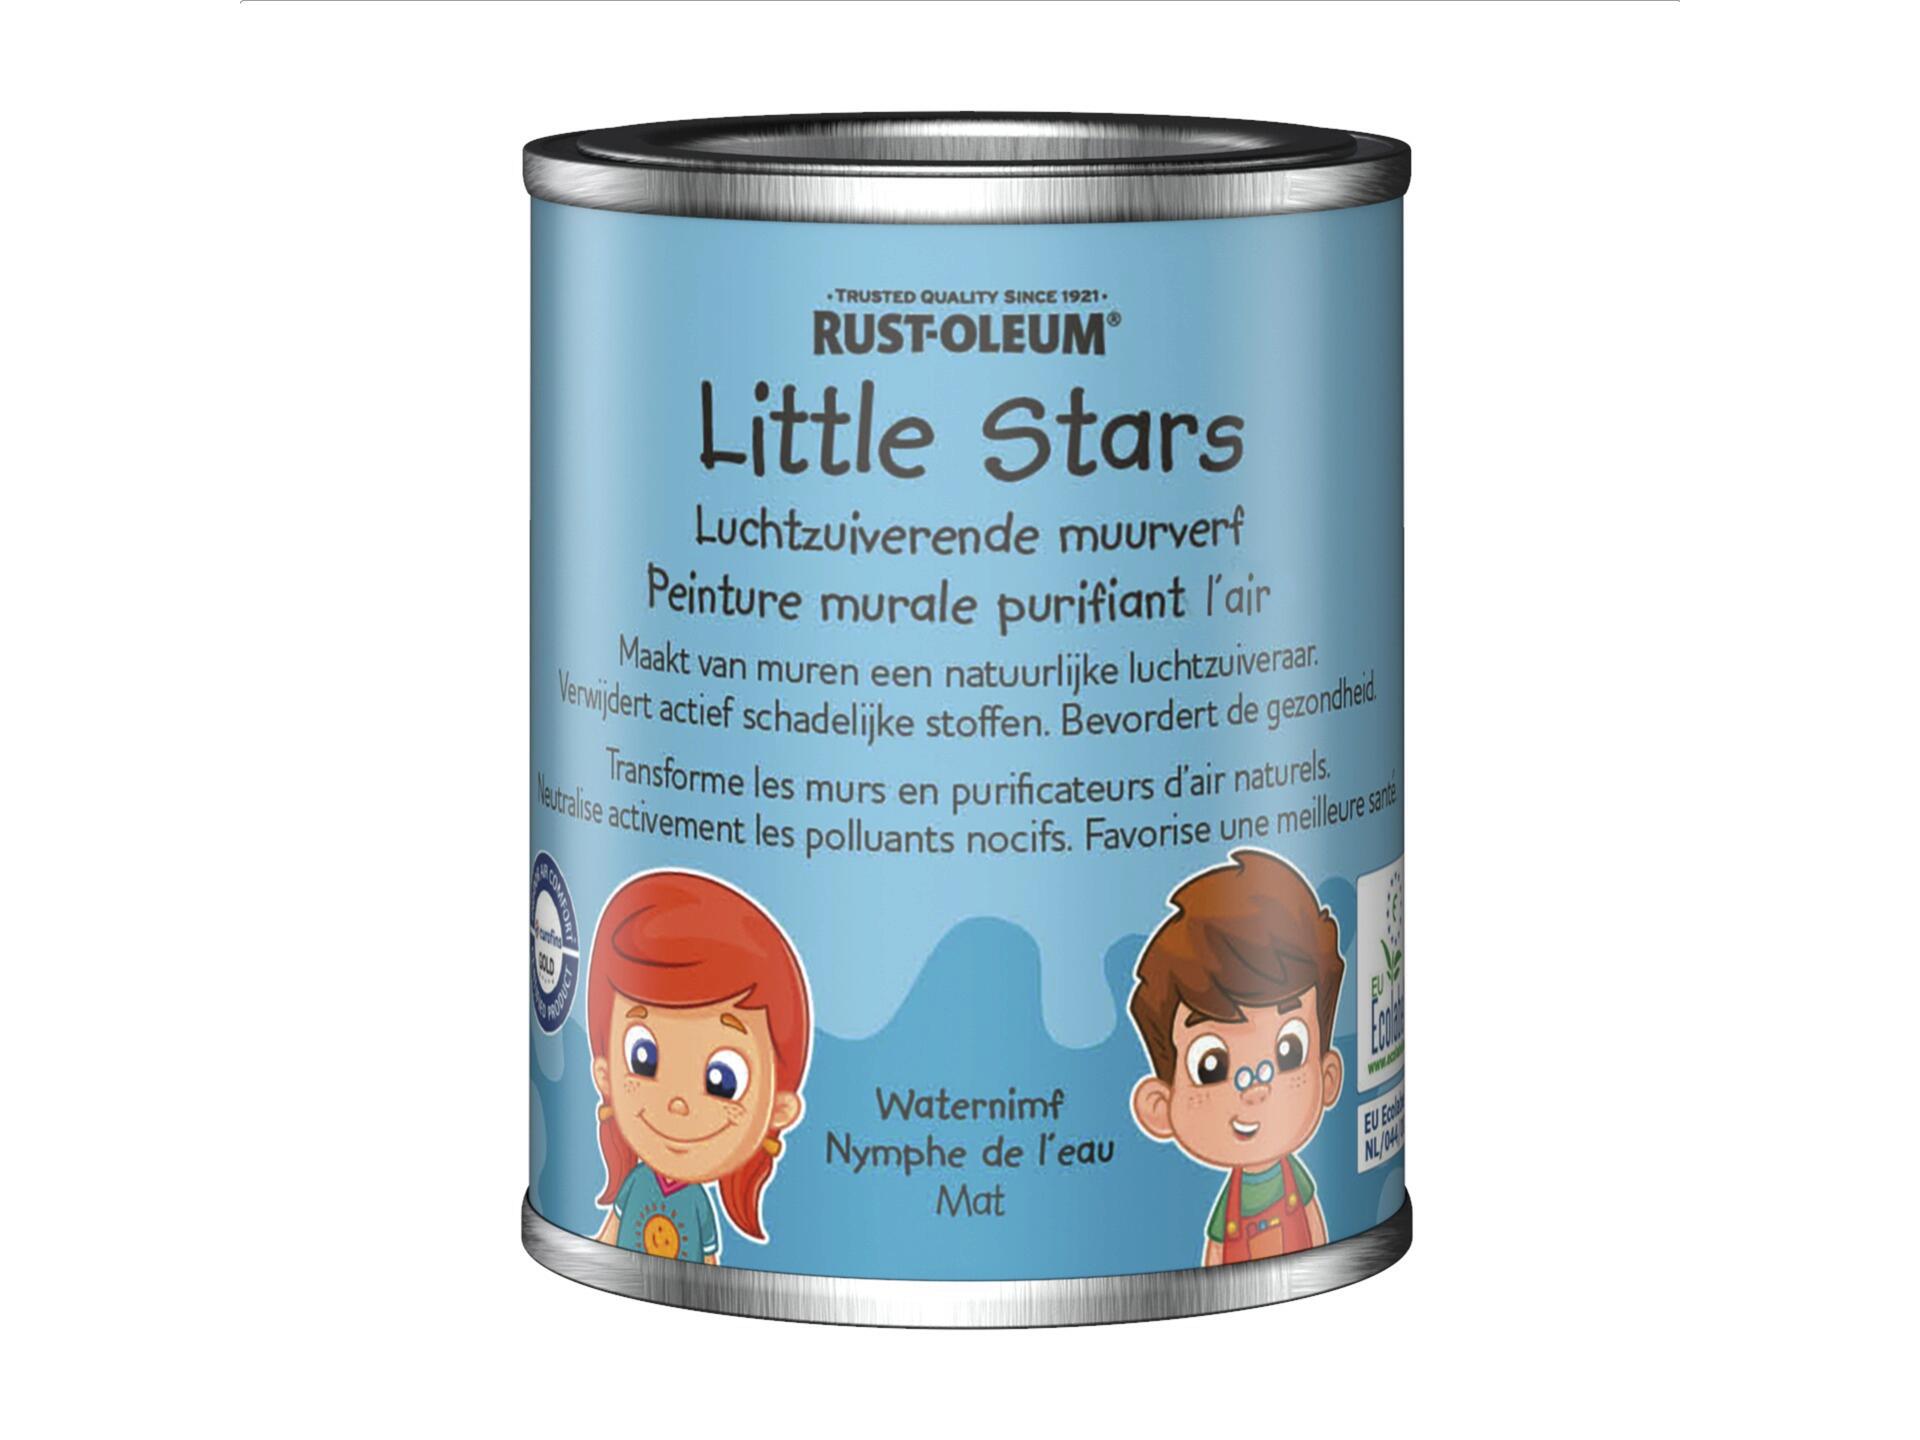 Rust-oleum Little Stars luchtzuiverende muurverf 125ml waternimf